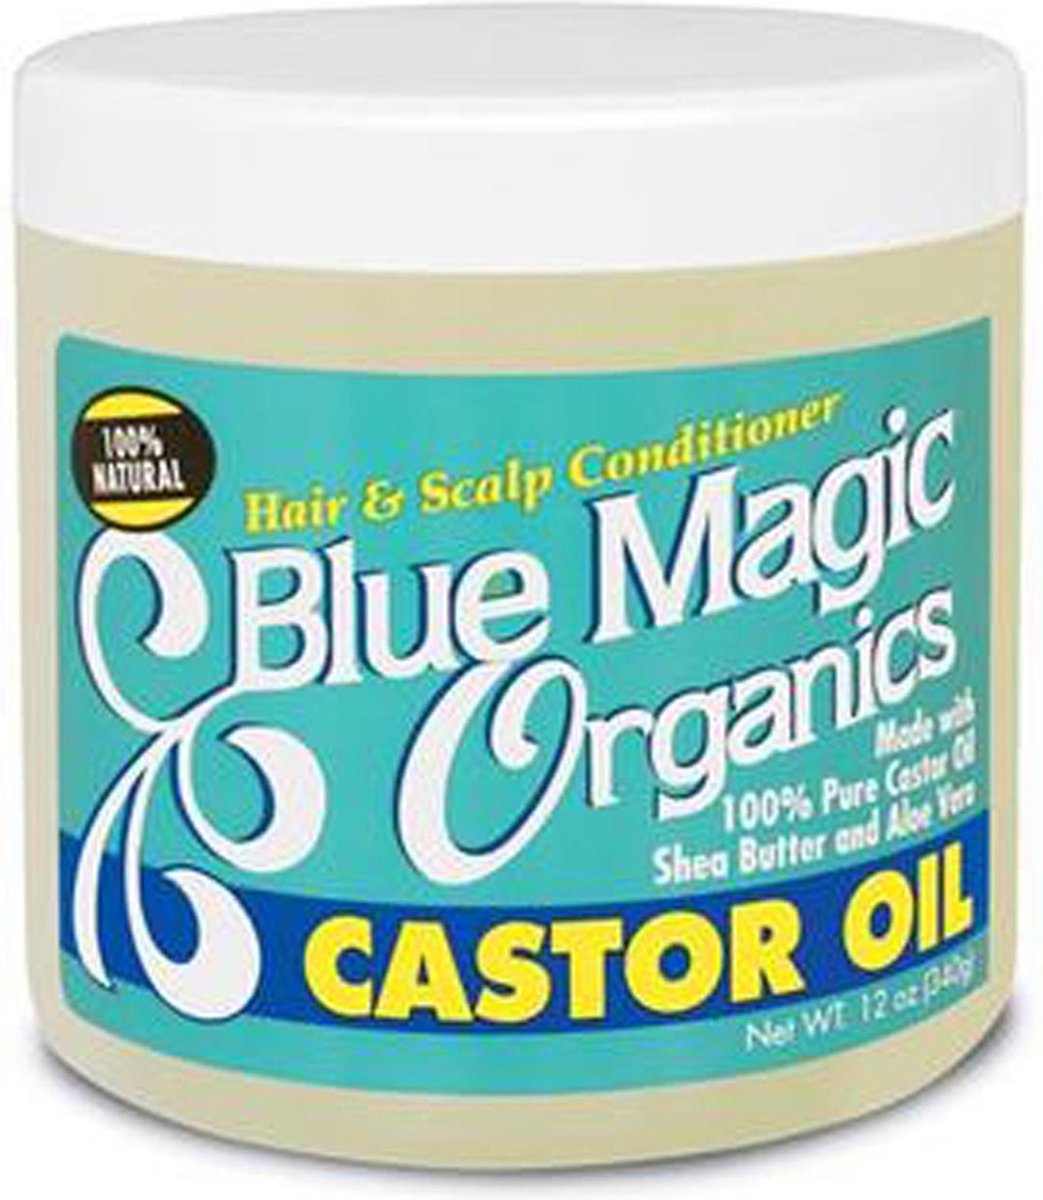 Blue Magic Organics Castor Oil 340 gr